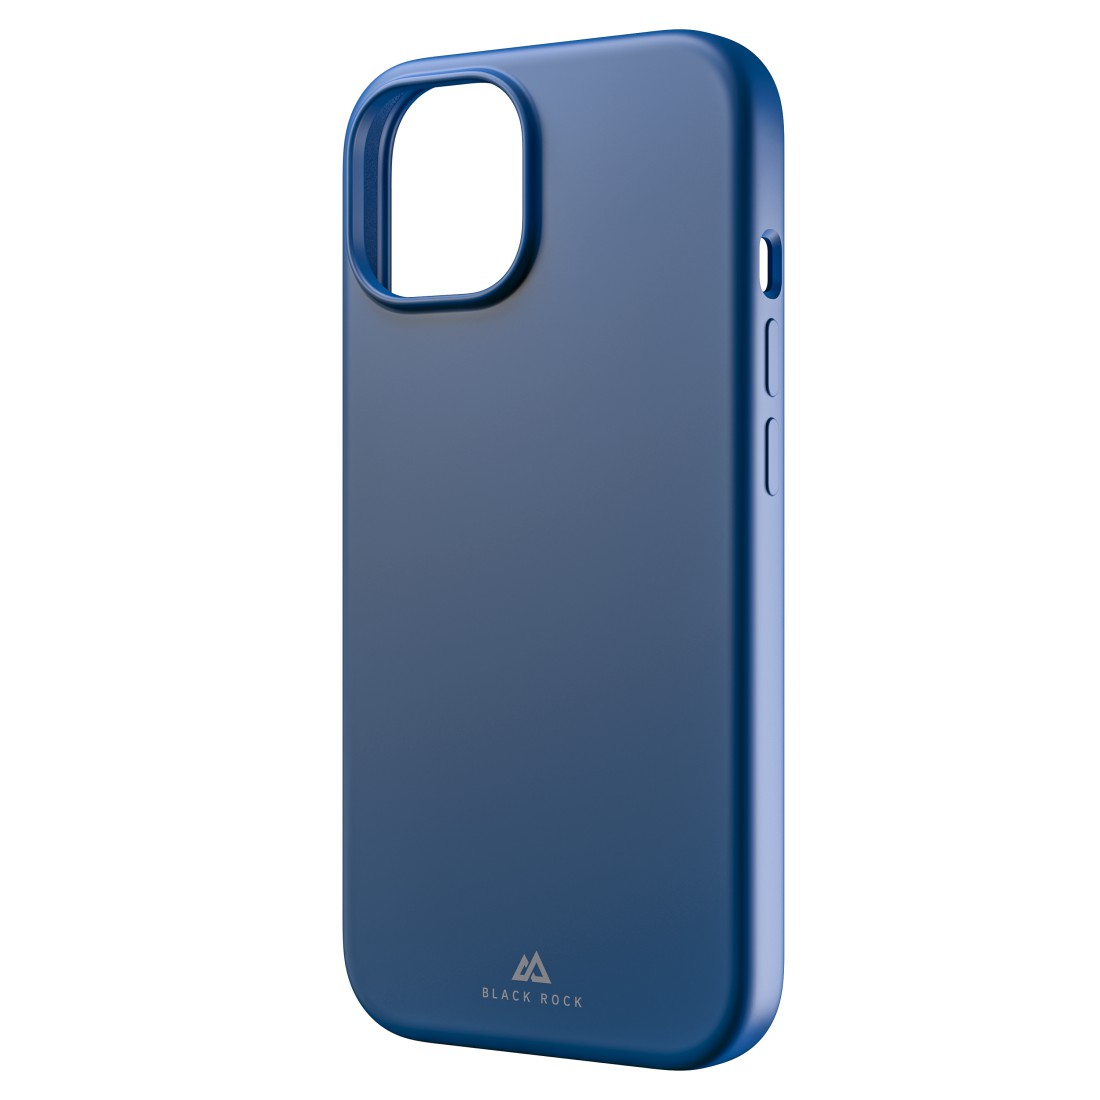 Mag Blue Backcover, Navy Case, ROCK BLACK Apple, Urban 15, iPhone